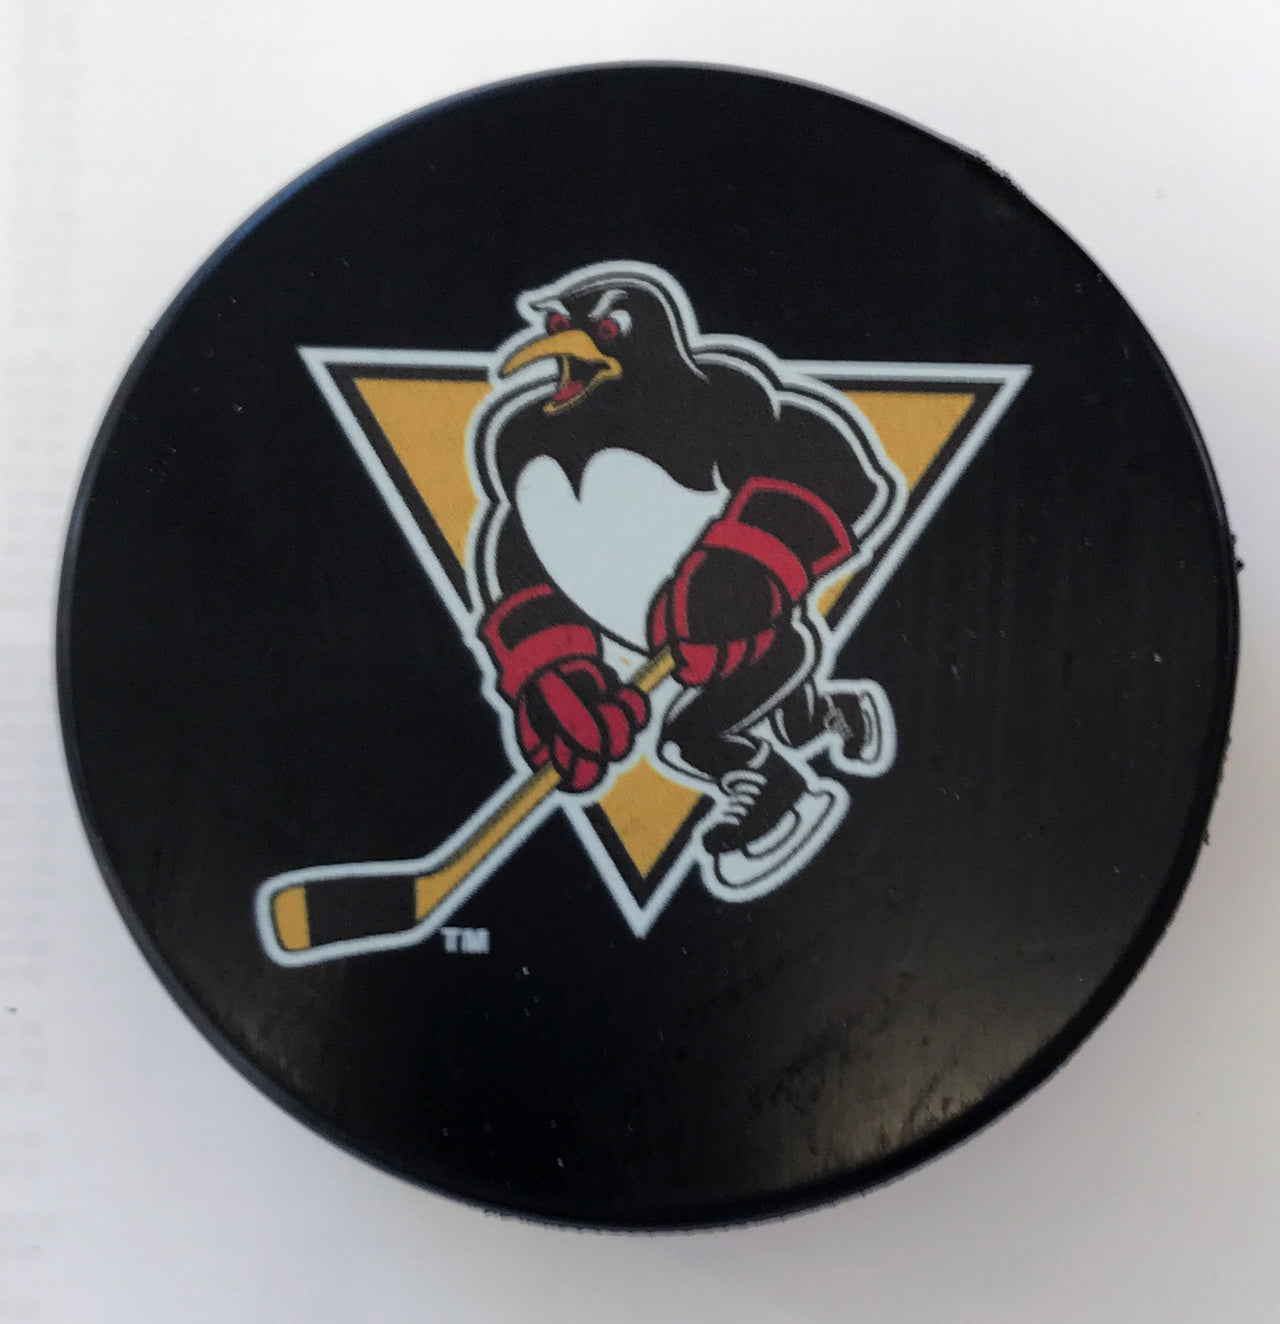 Wilkes-Barre/Scranton Penguins Team Logo Souvenir Puck